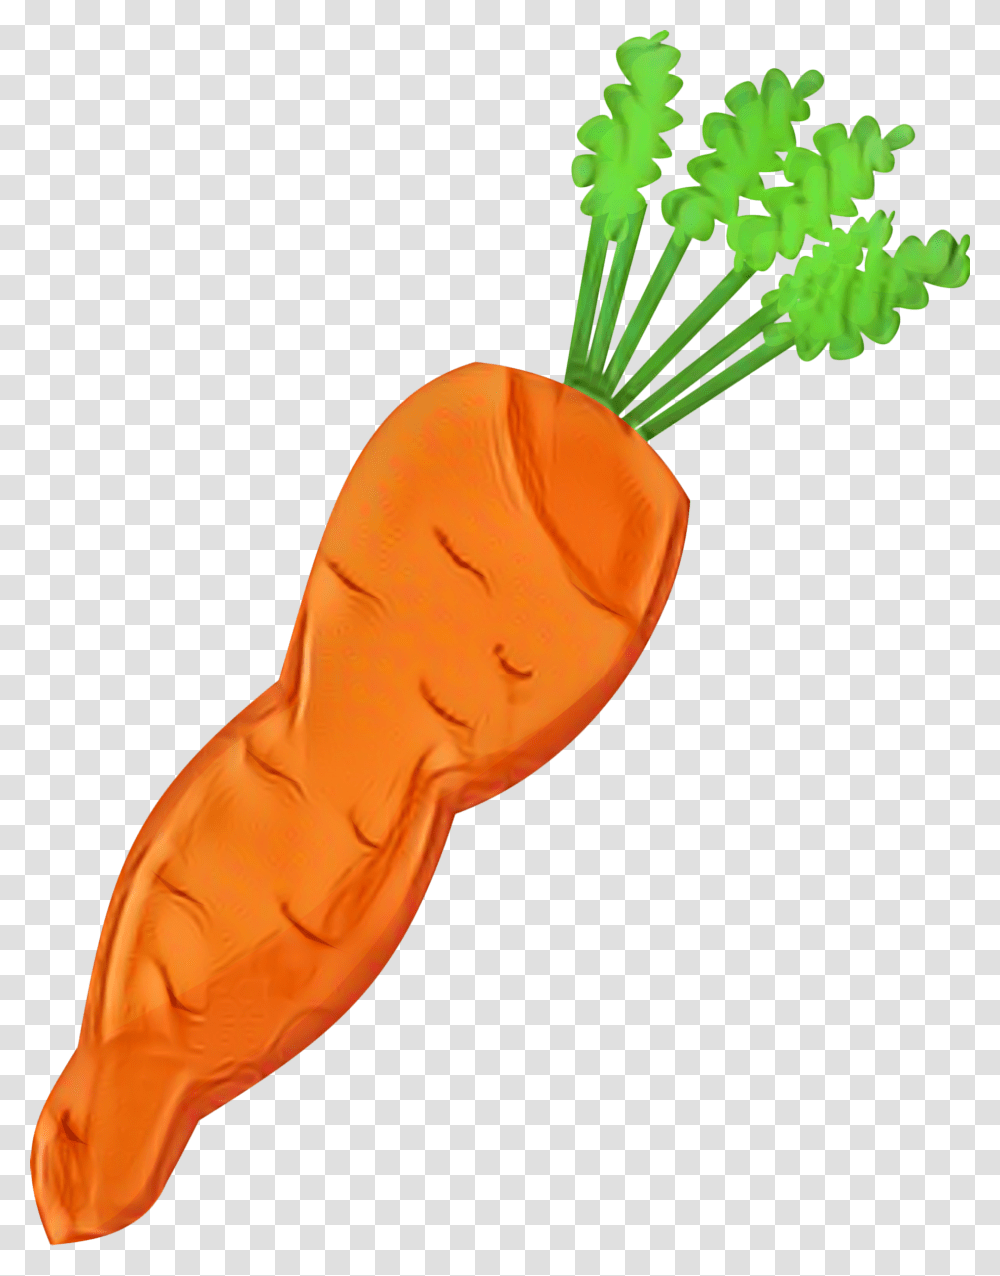 Baby Carrot Clip Art Vegetable Carrot Salad Clip Art Carrot, Plant, Food, Person, Human Transparent Png